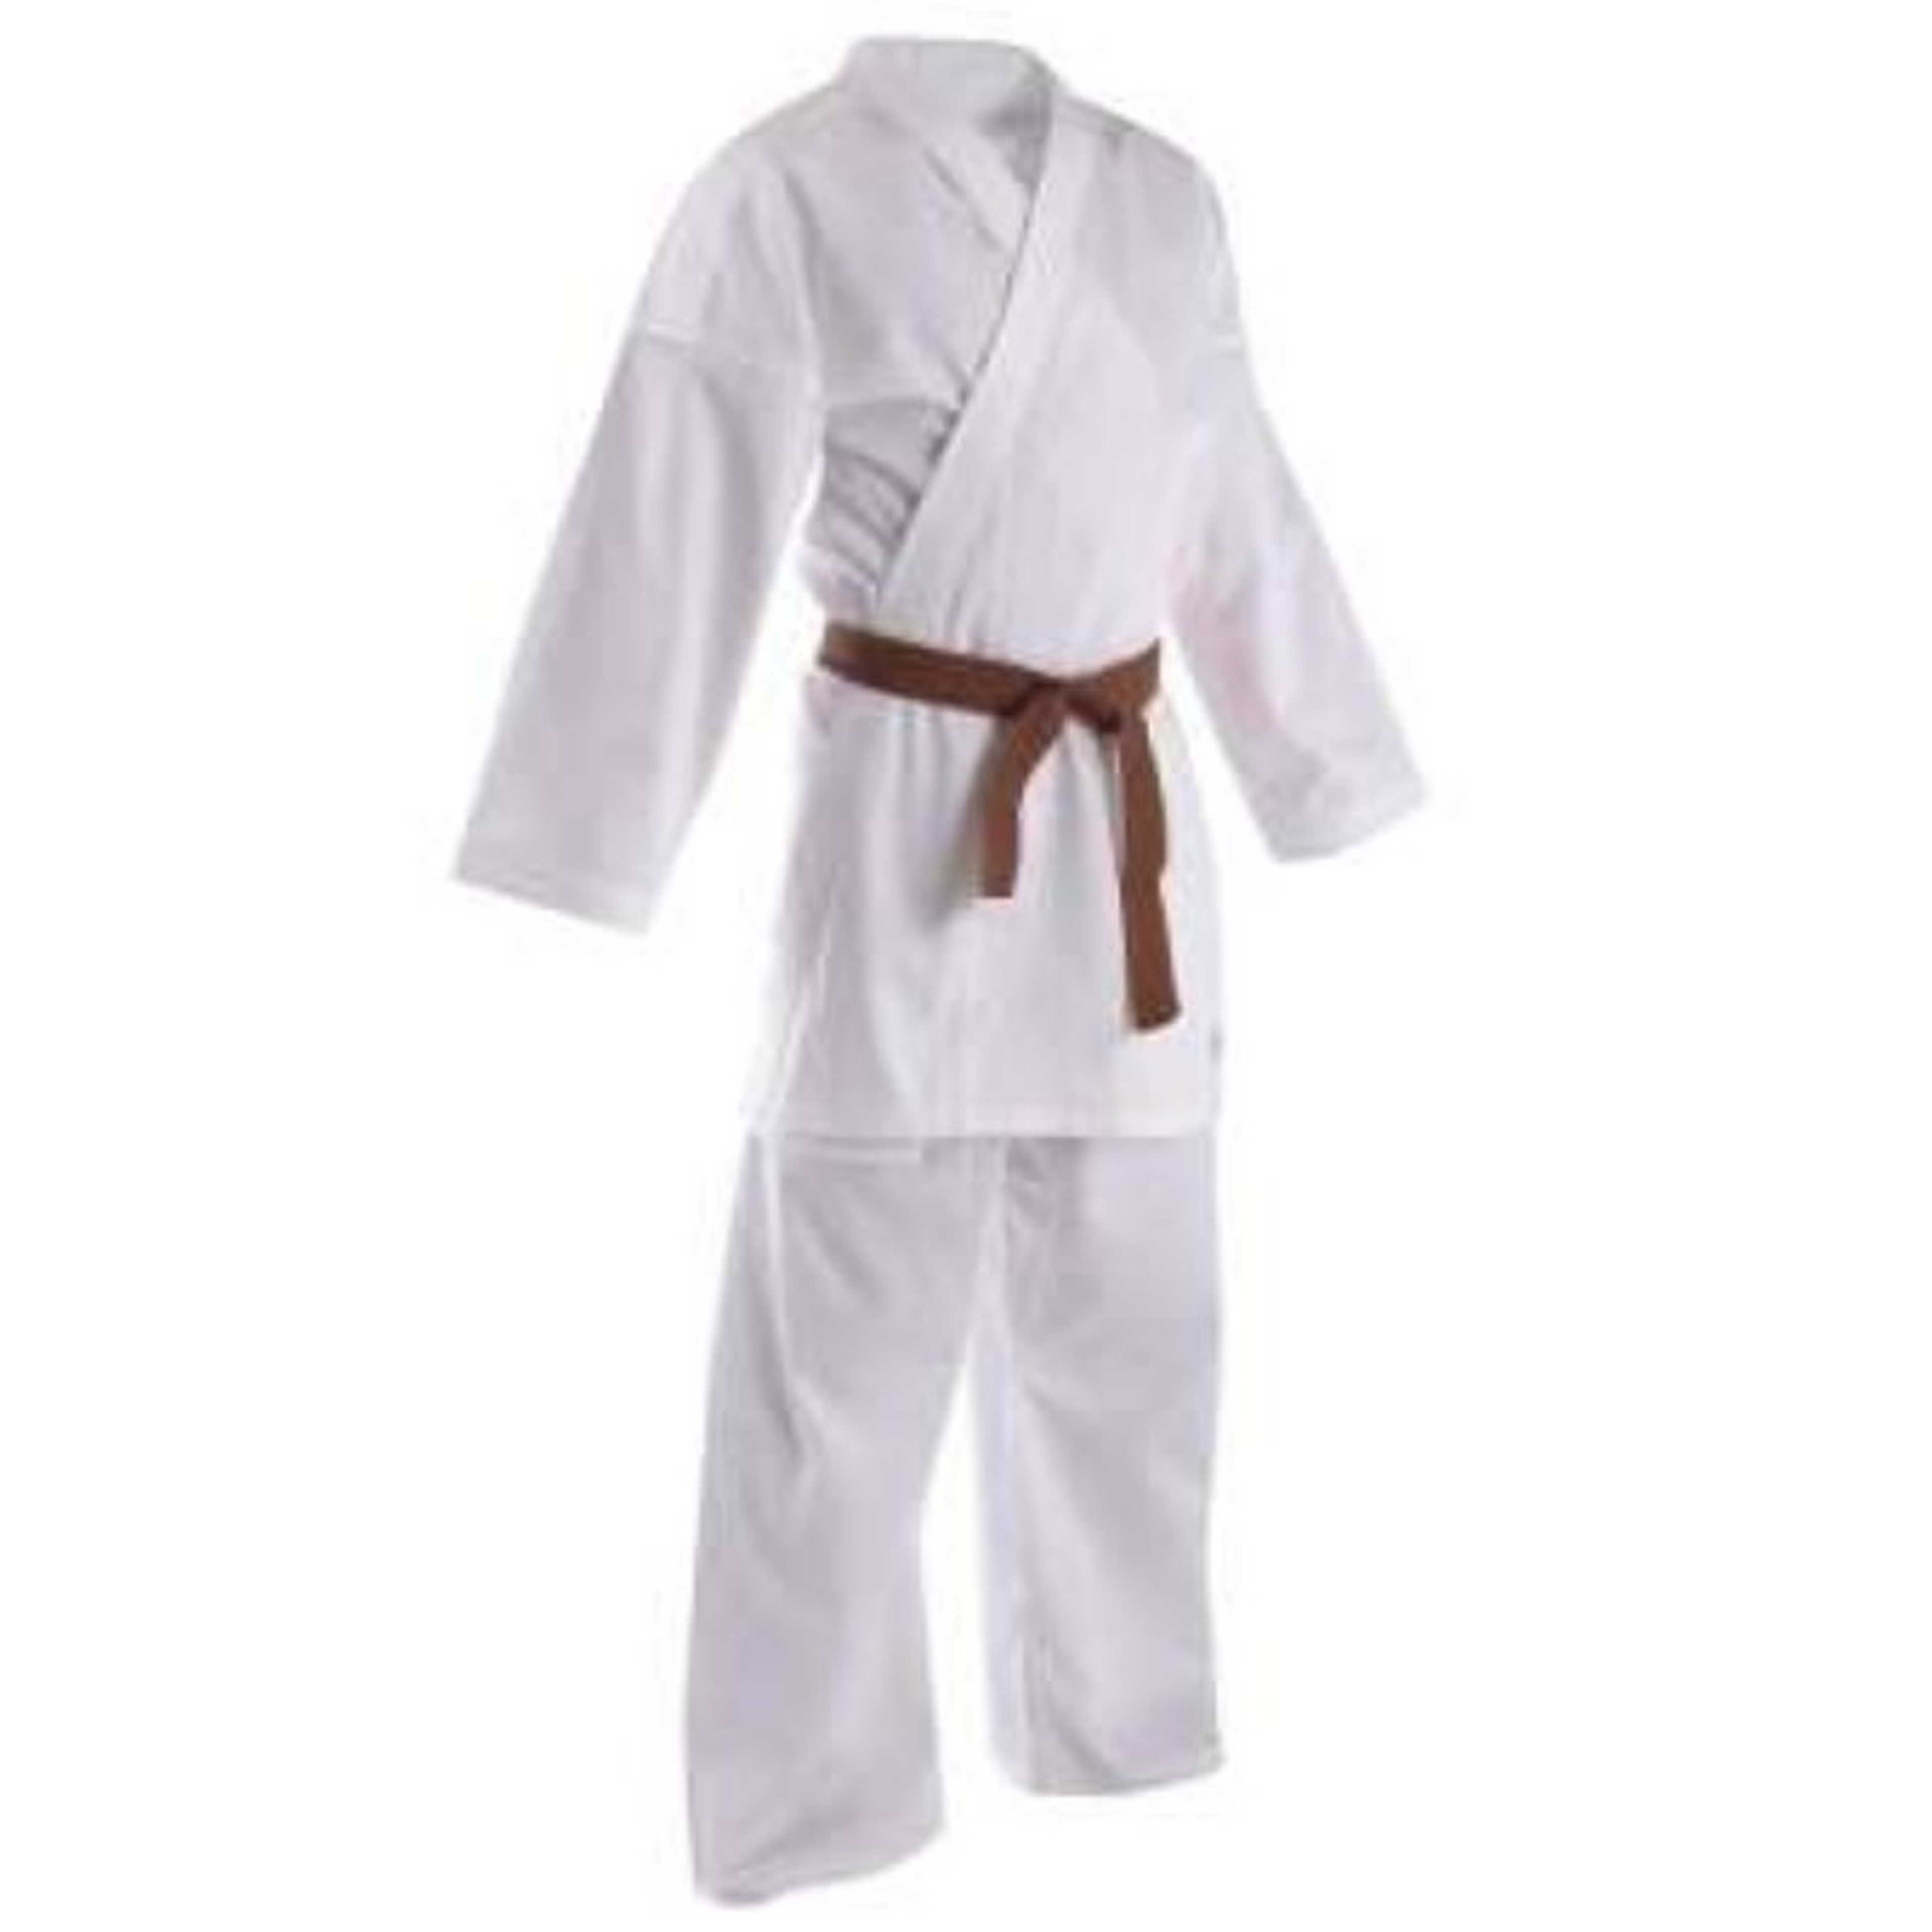 Taekwondo Dress Kits No 2 with Brown Belt